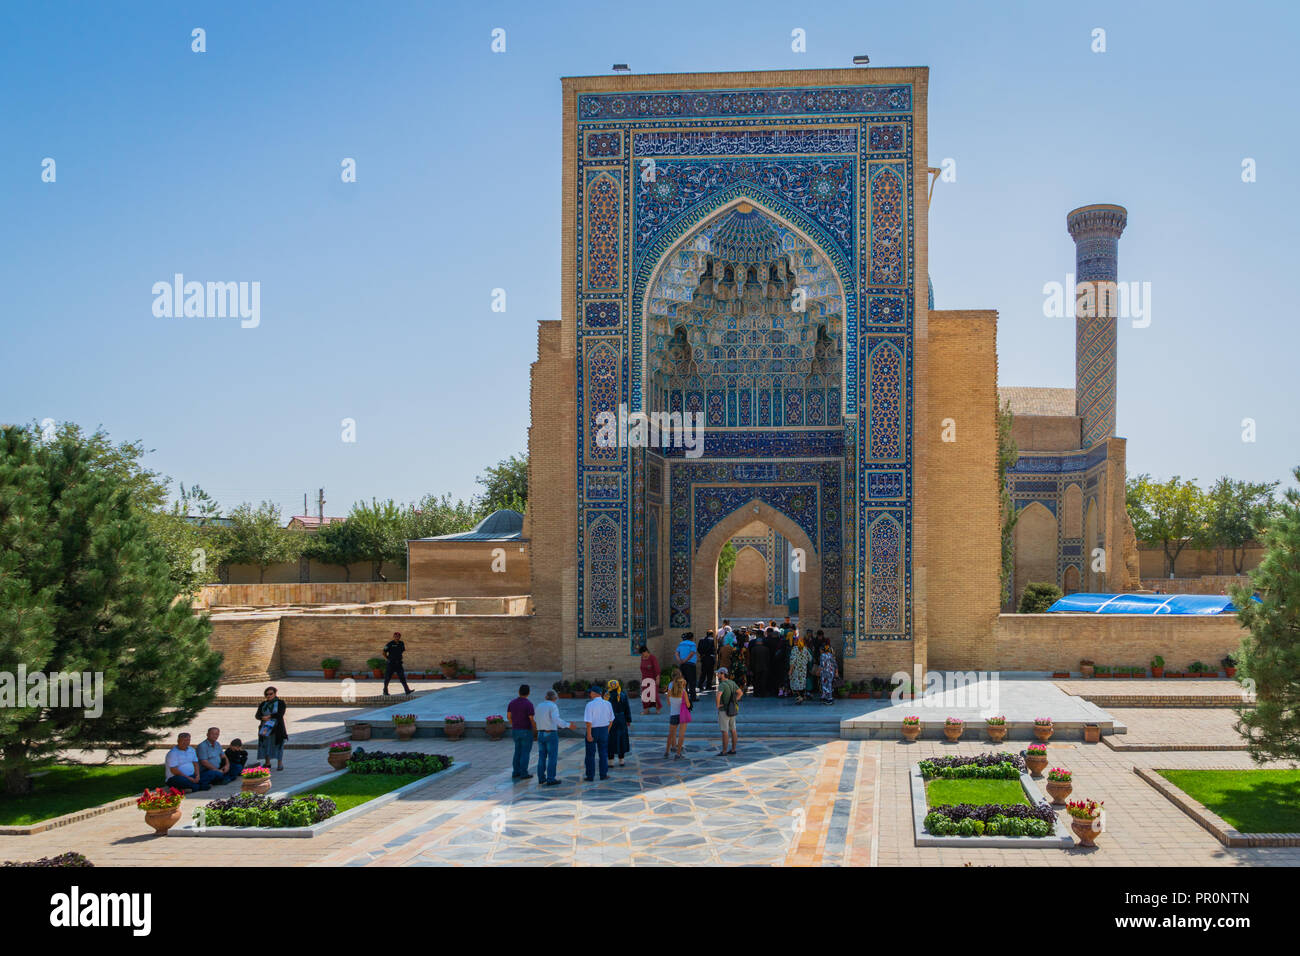 Samarkand, Uzbekistan - Septem 2018: Amir Temur Mausoleum in Samarkand, Uzbekistan. It is the mausoleum of the asian conqueror Tamerlane, also known a Stock Photo